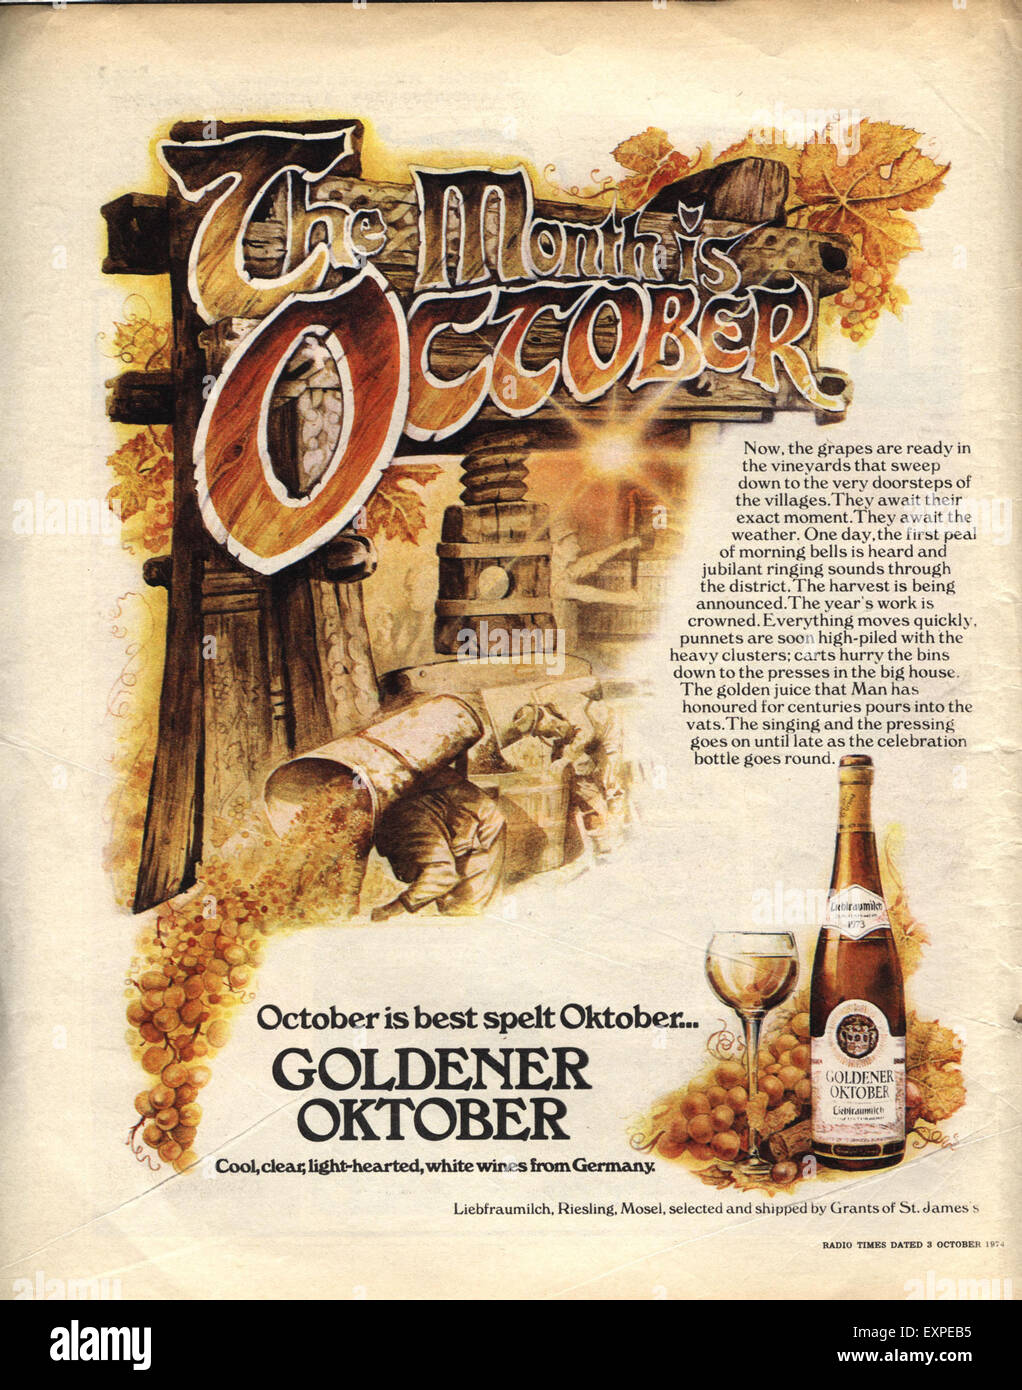 1970s UK Goldener Oktober germany liebfraumilch Magazine Advert